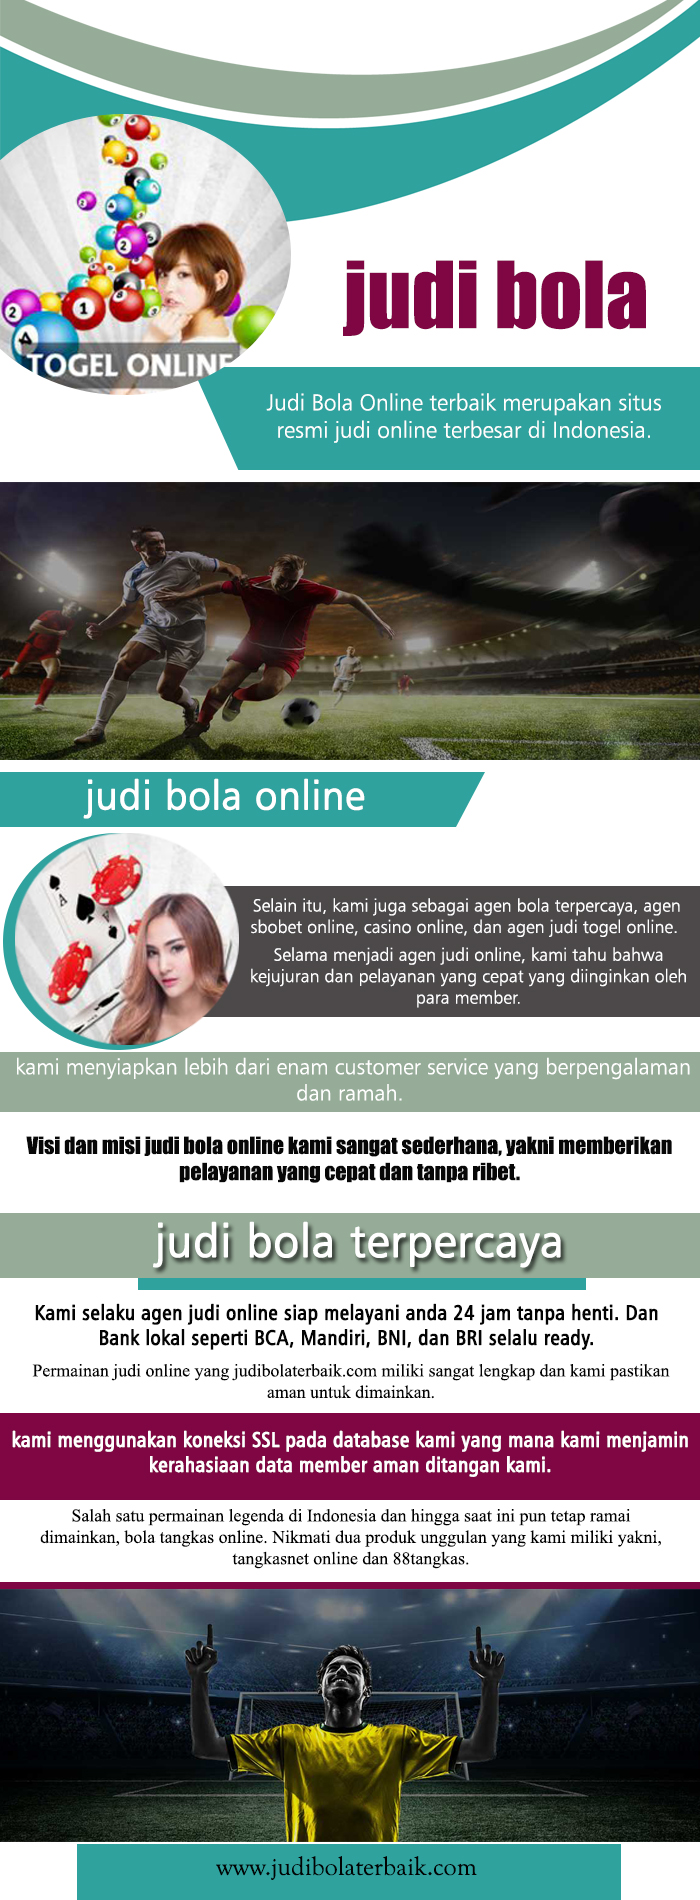 website judi bola indonesia